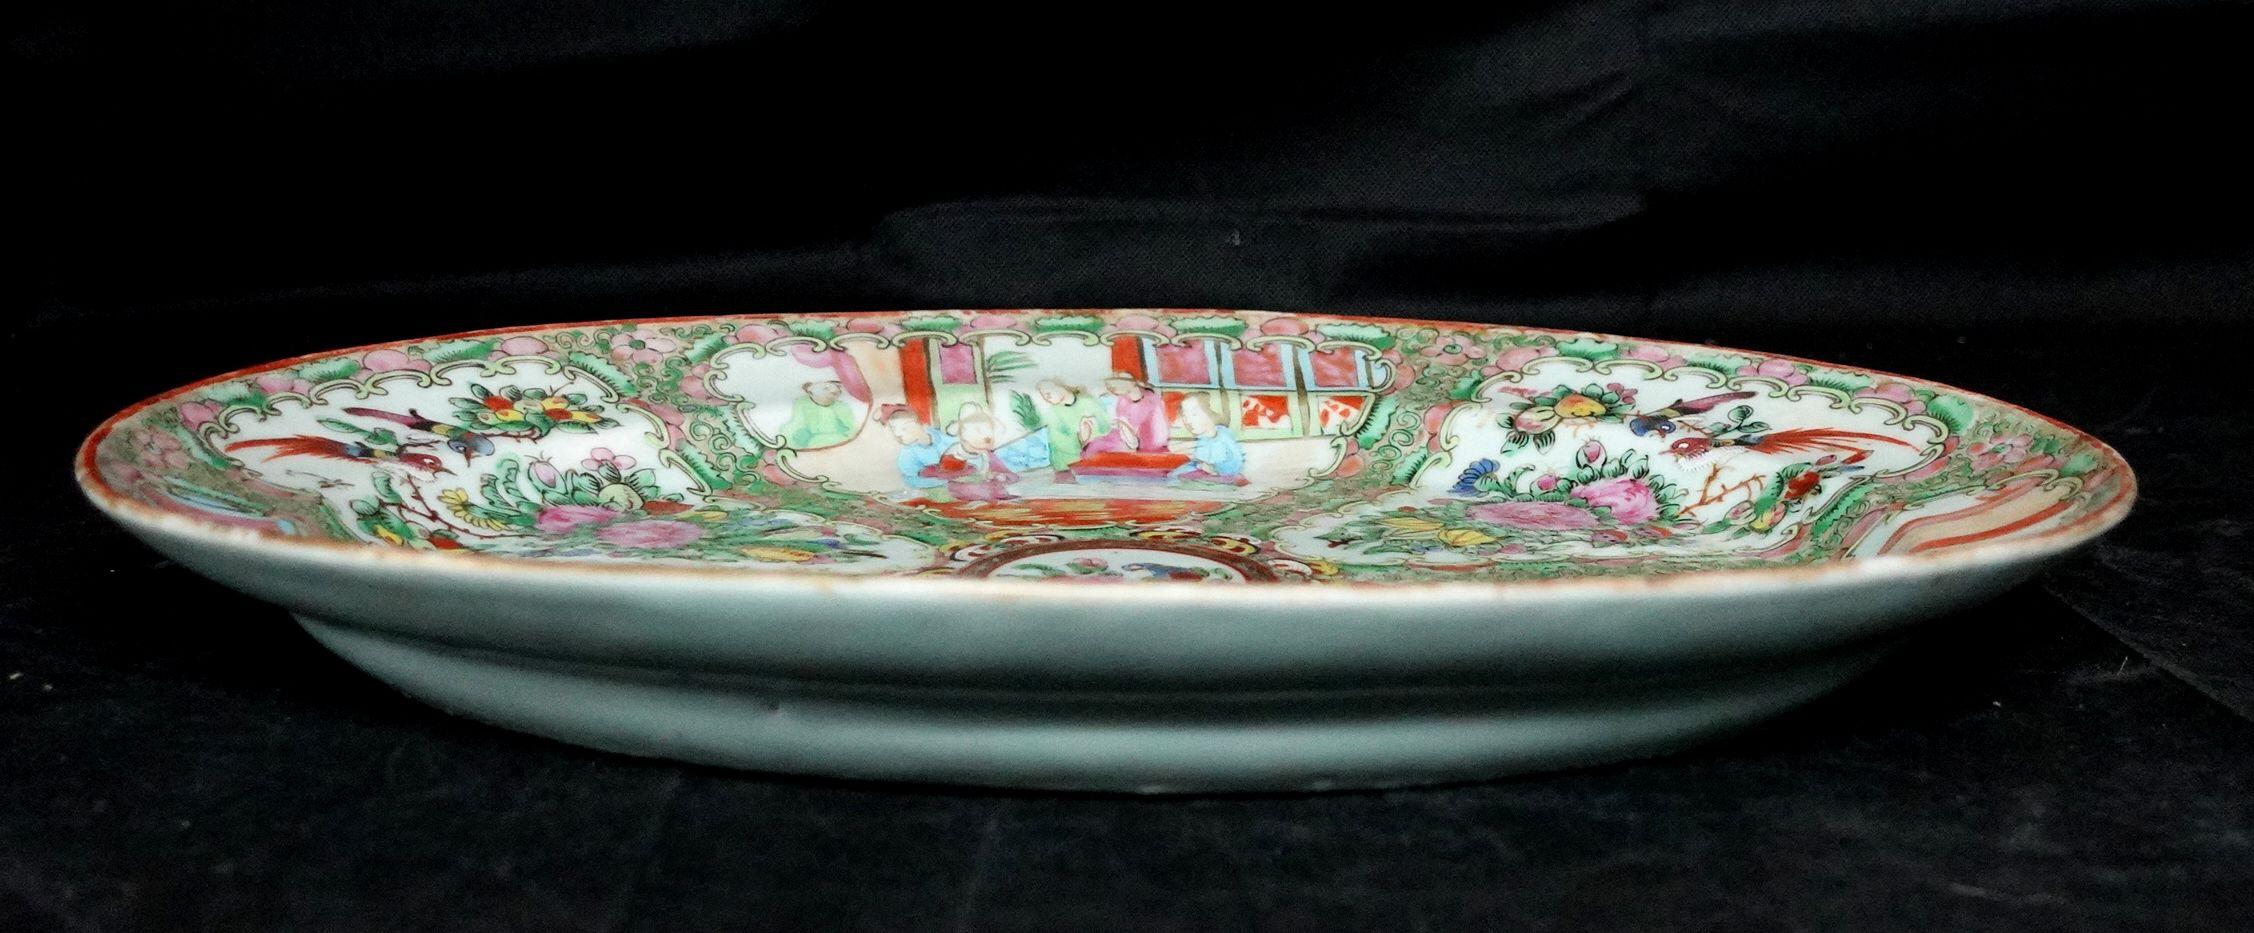 Medium Size Chinese Rose Medallion Porcelain Plater, Ric 058 7